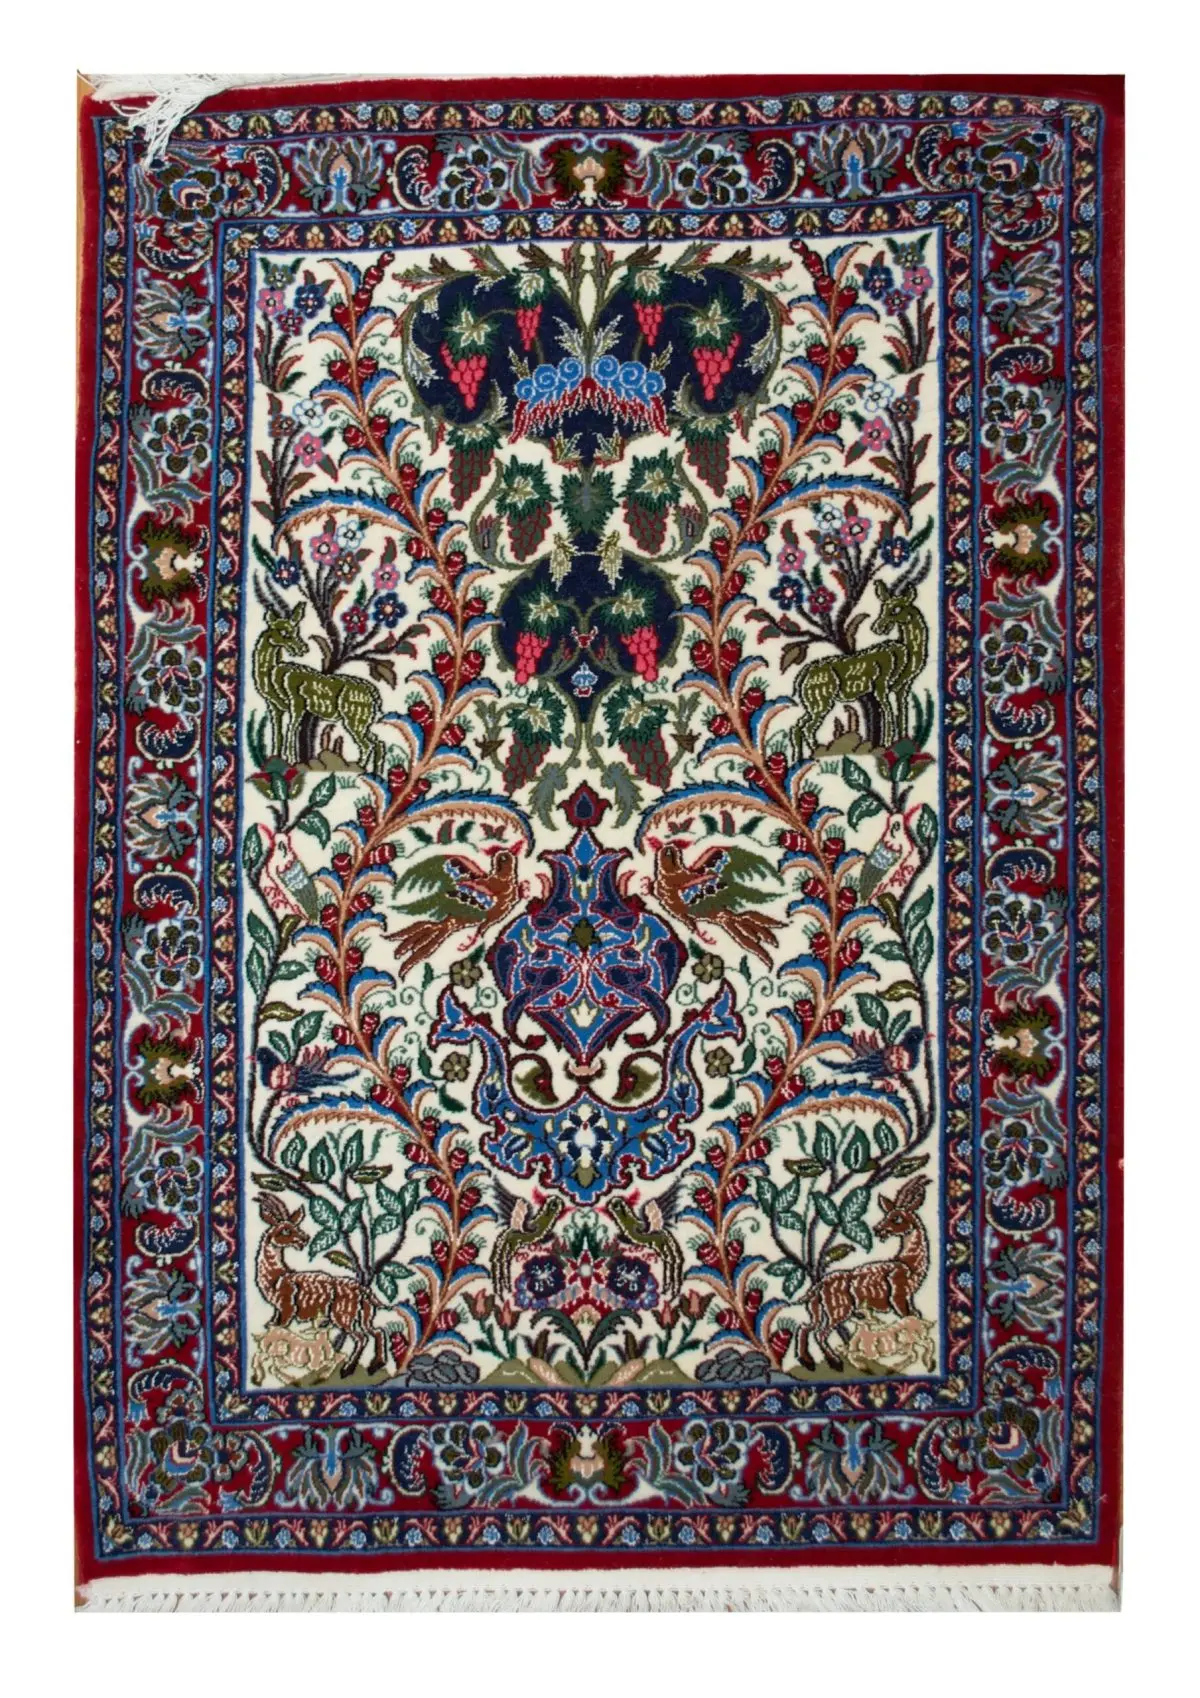 Persian Esfahan rug 2' 4" x 3' 3" Handmade Area Rug - Shabahang Royal Carpet